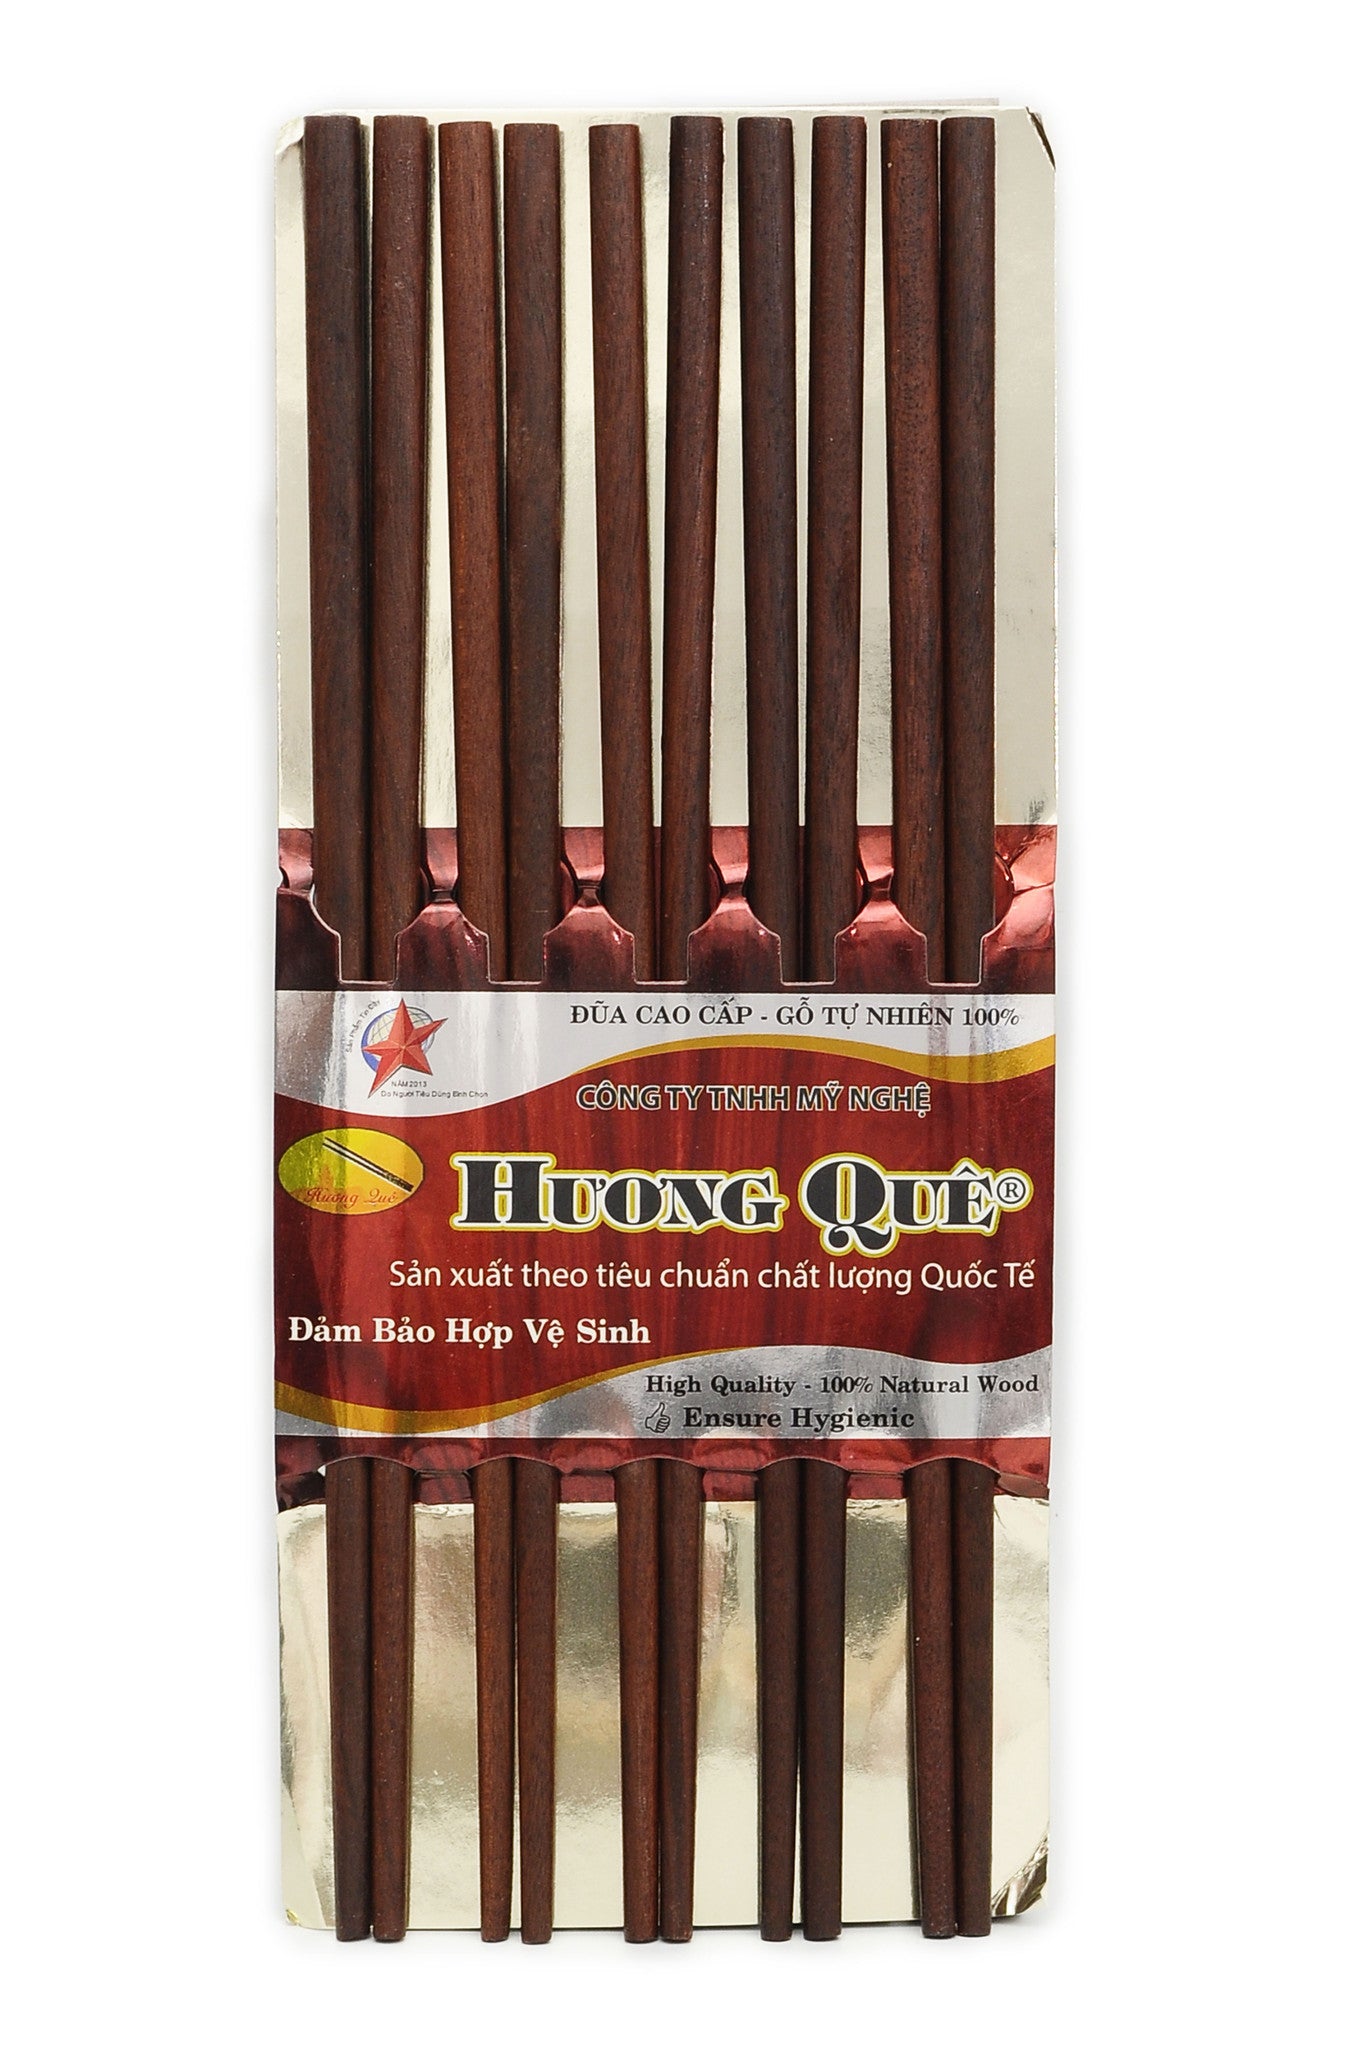 Vietnamese Advanced Natural Wood Chopsticks (10 pairs) – Ensure Hygienic